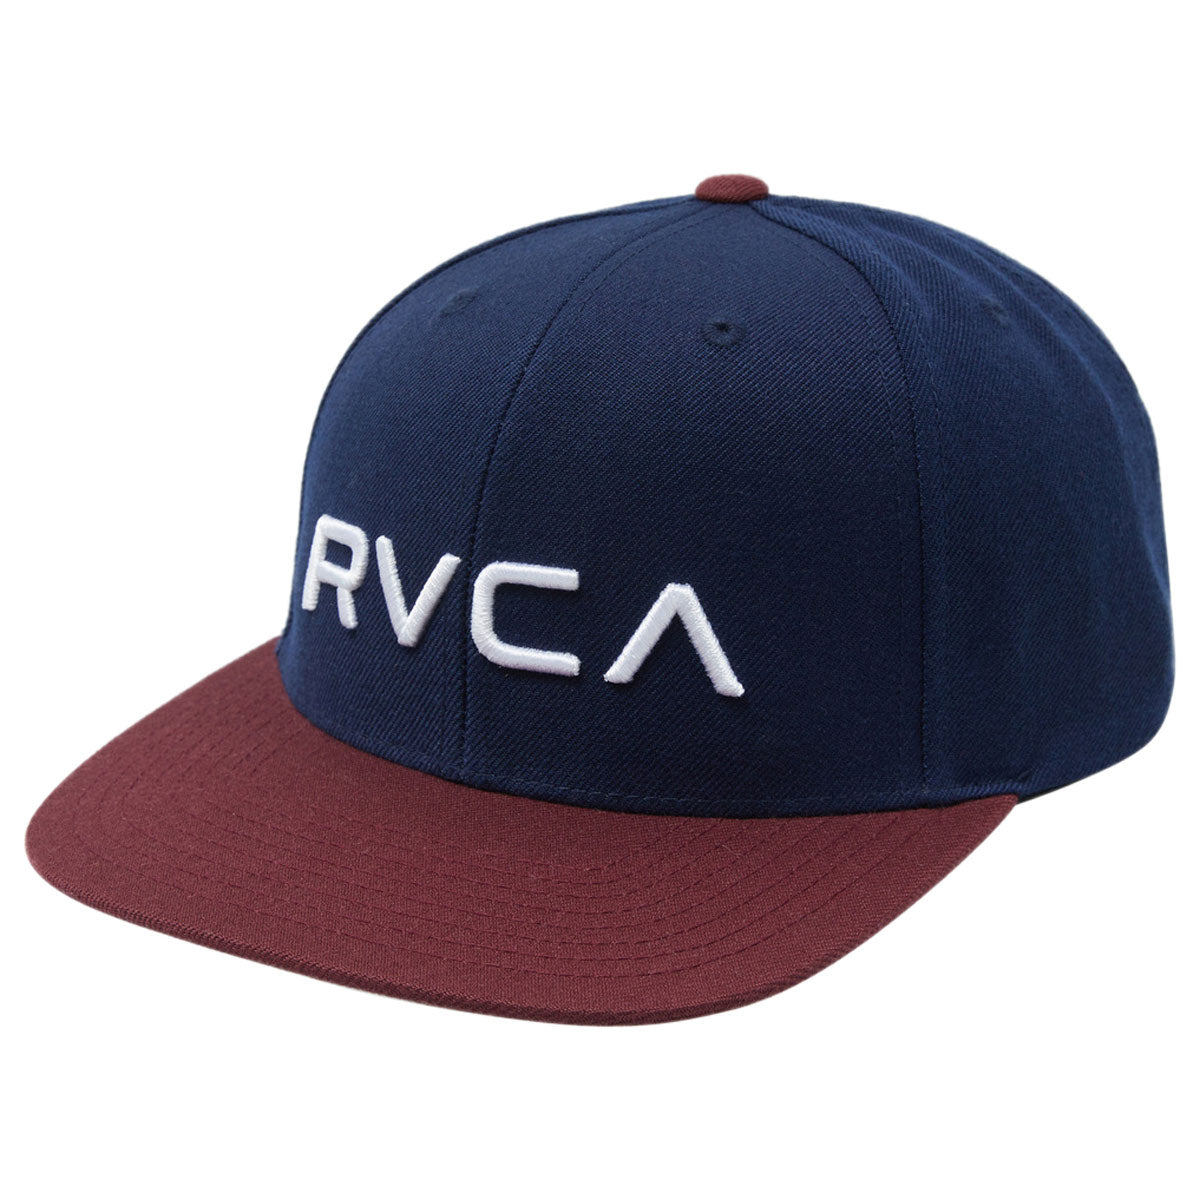 RVCA Twill Snapback II Hat - Navy image 1